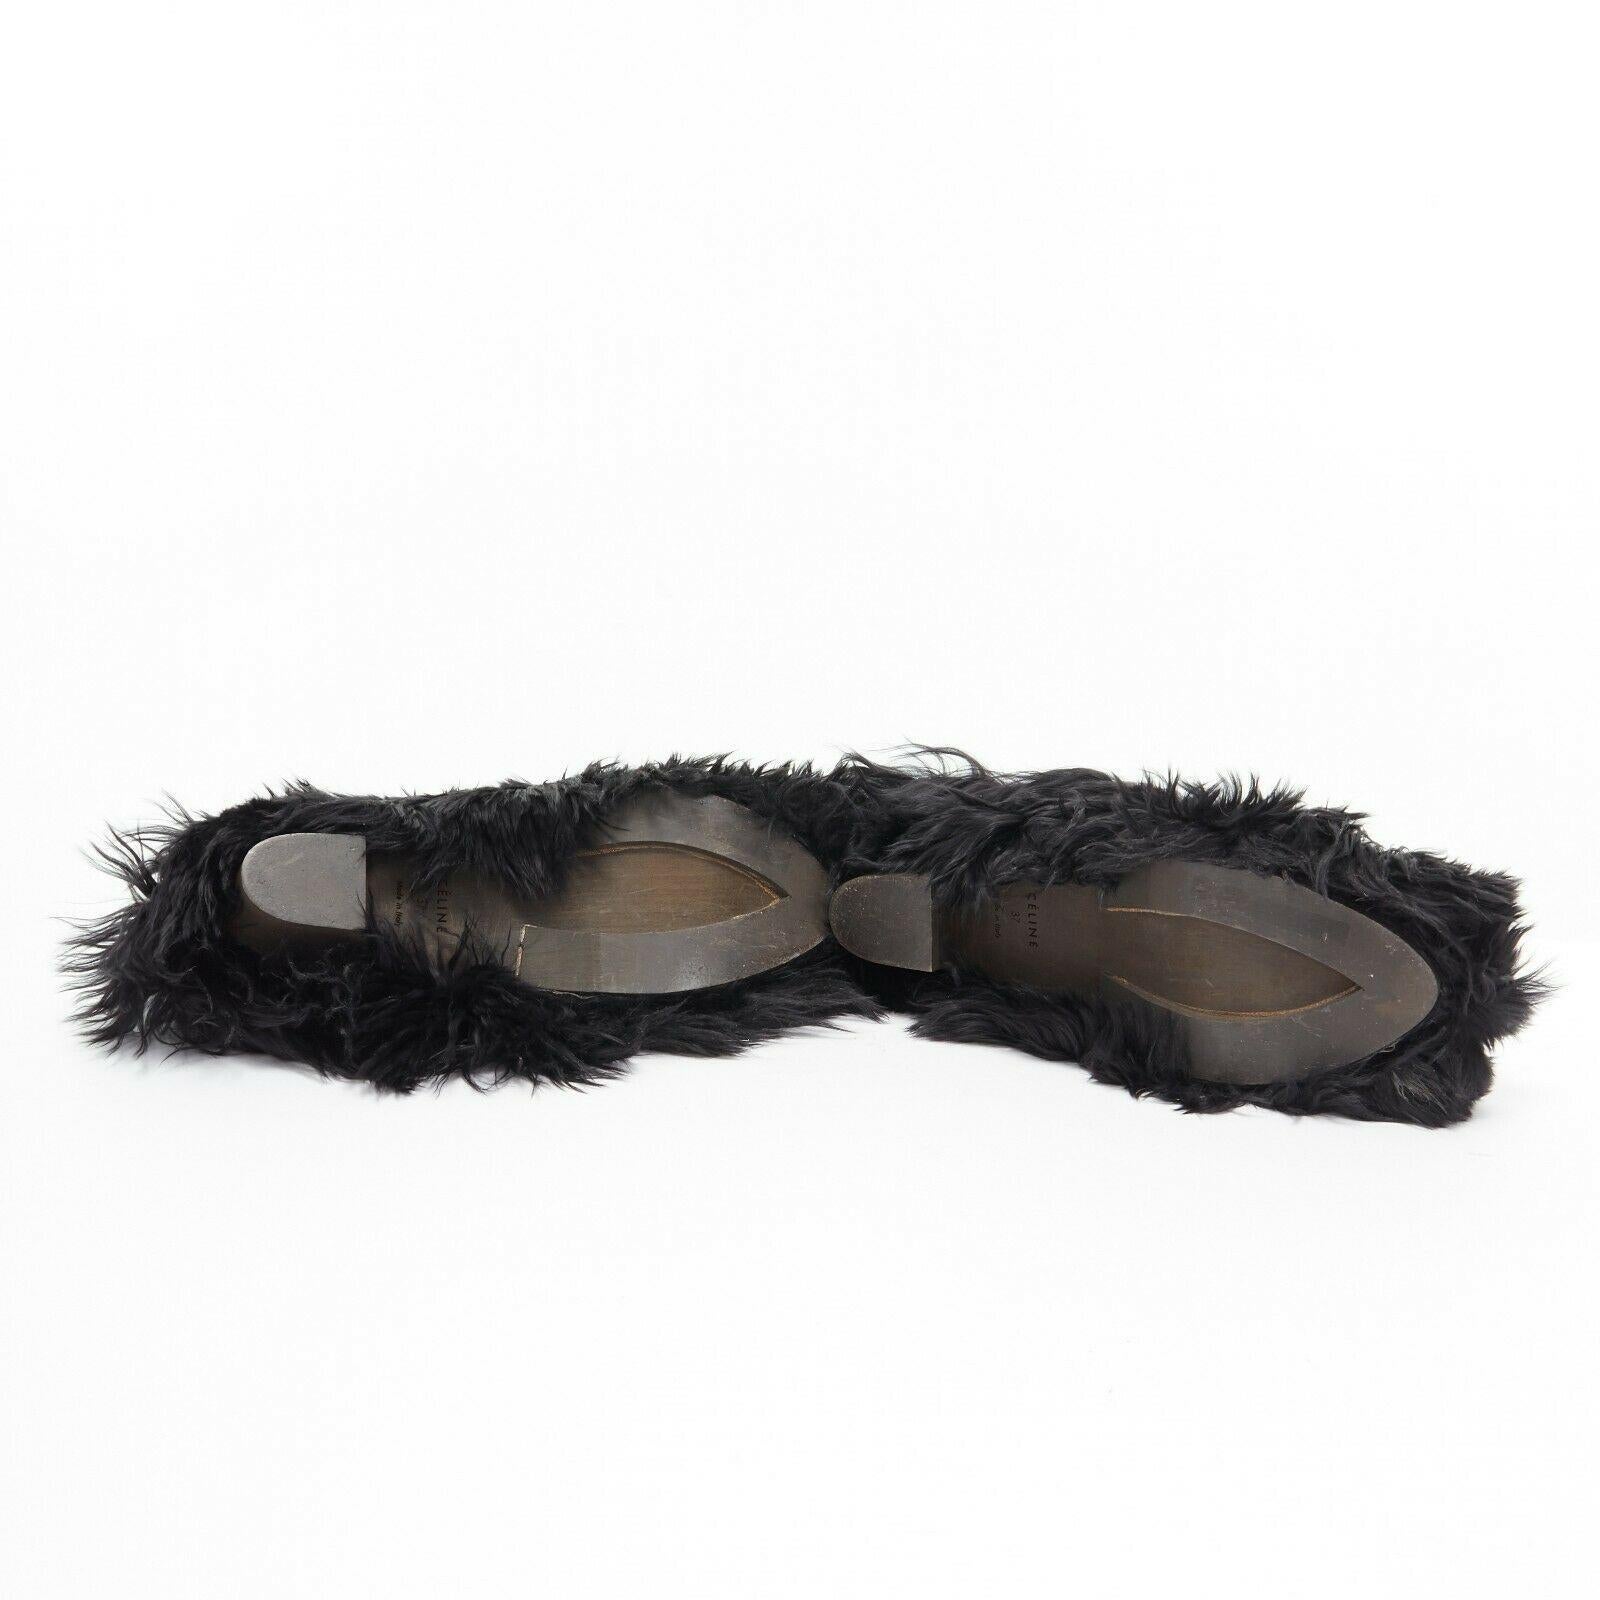 Black CELINE PHOEBE PHILO black alpaca long fur slip on mule clog slippers EU37